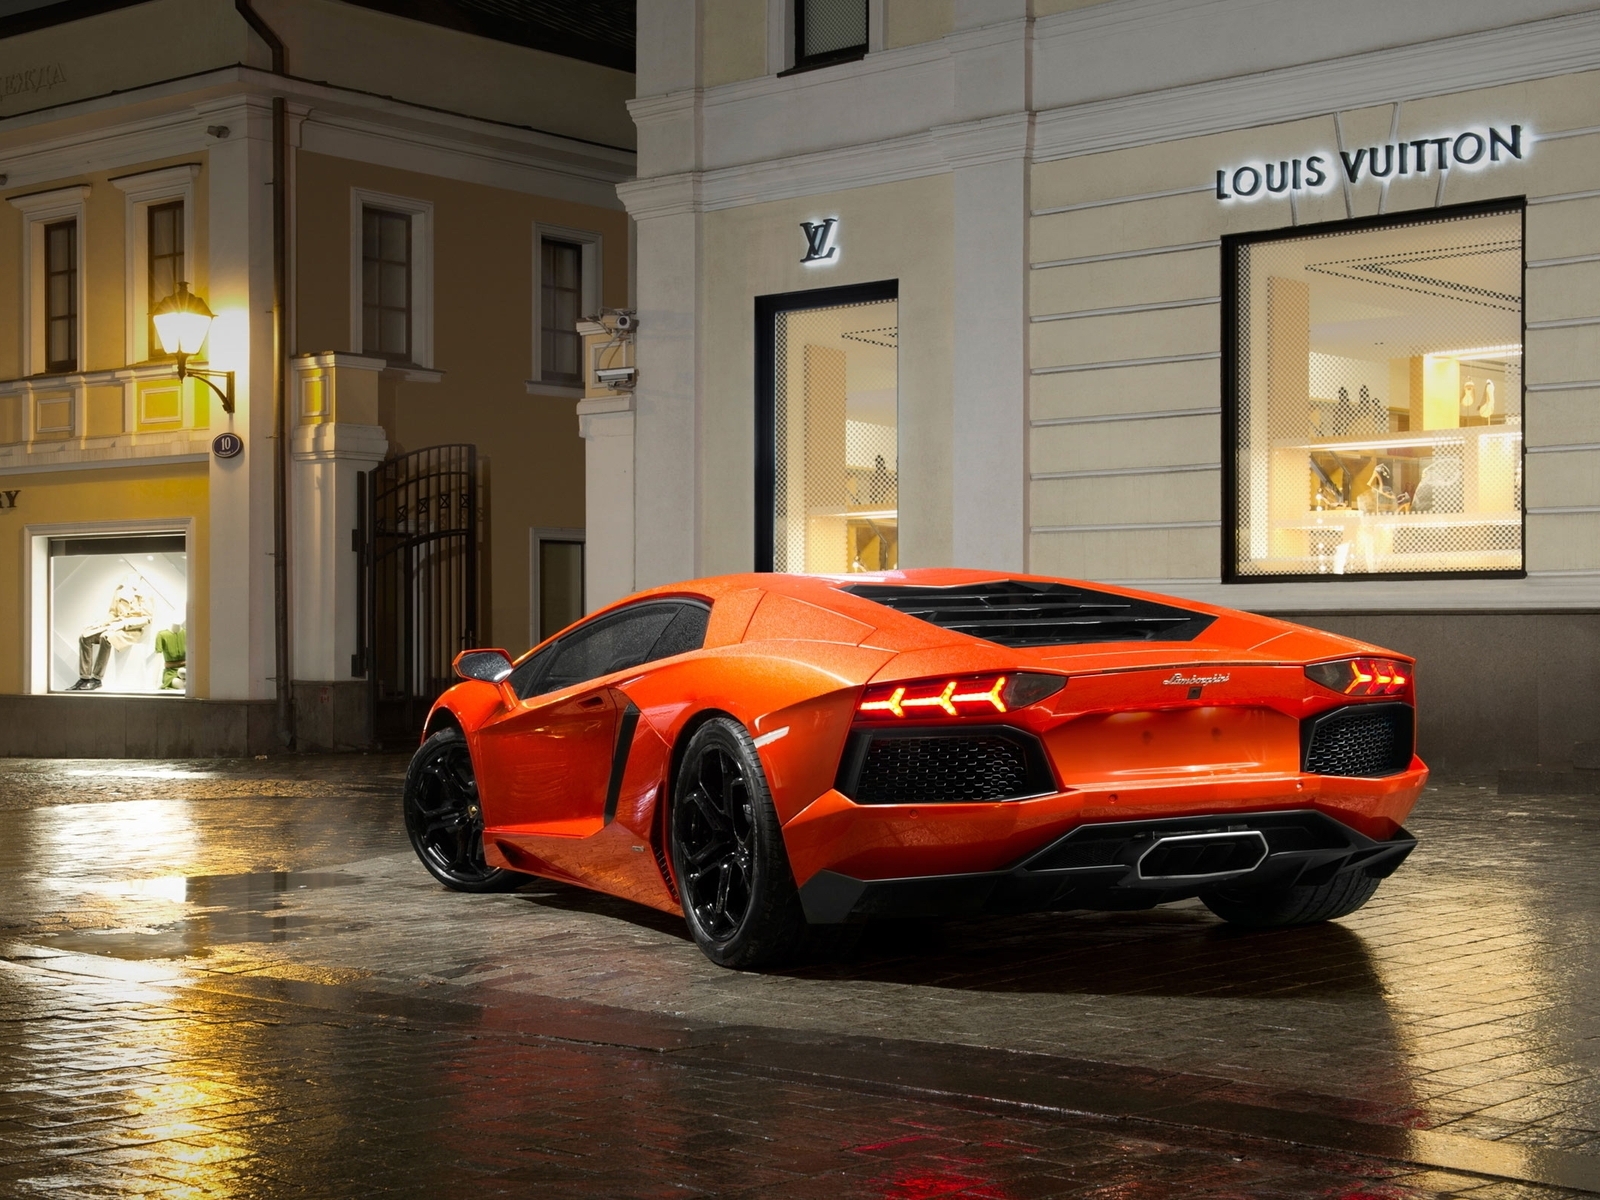 Картинка: Суперкар, оранжевый, Lamborghini, Aventador, lp700 4, roadster, тротуар, дорога, мокрая, здания, фонари, магазины, ночь